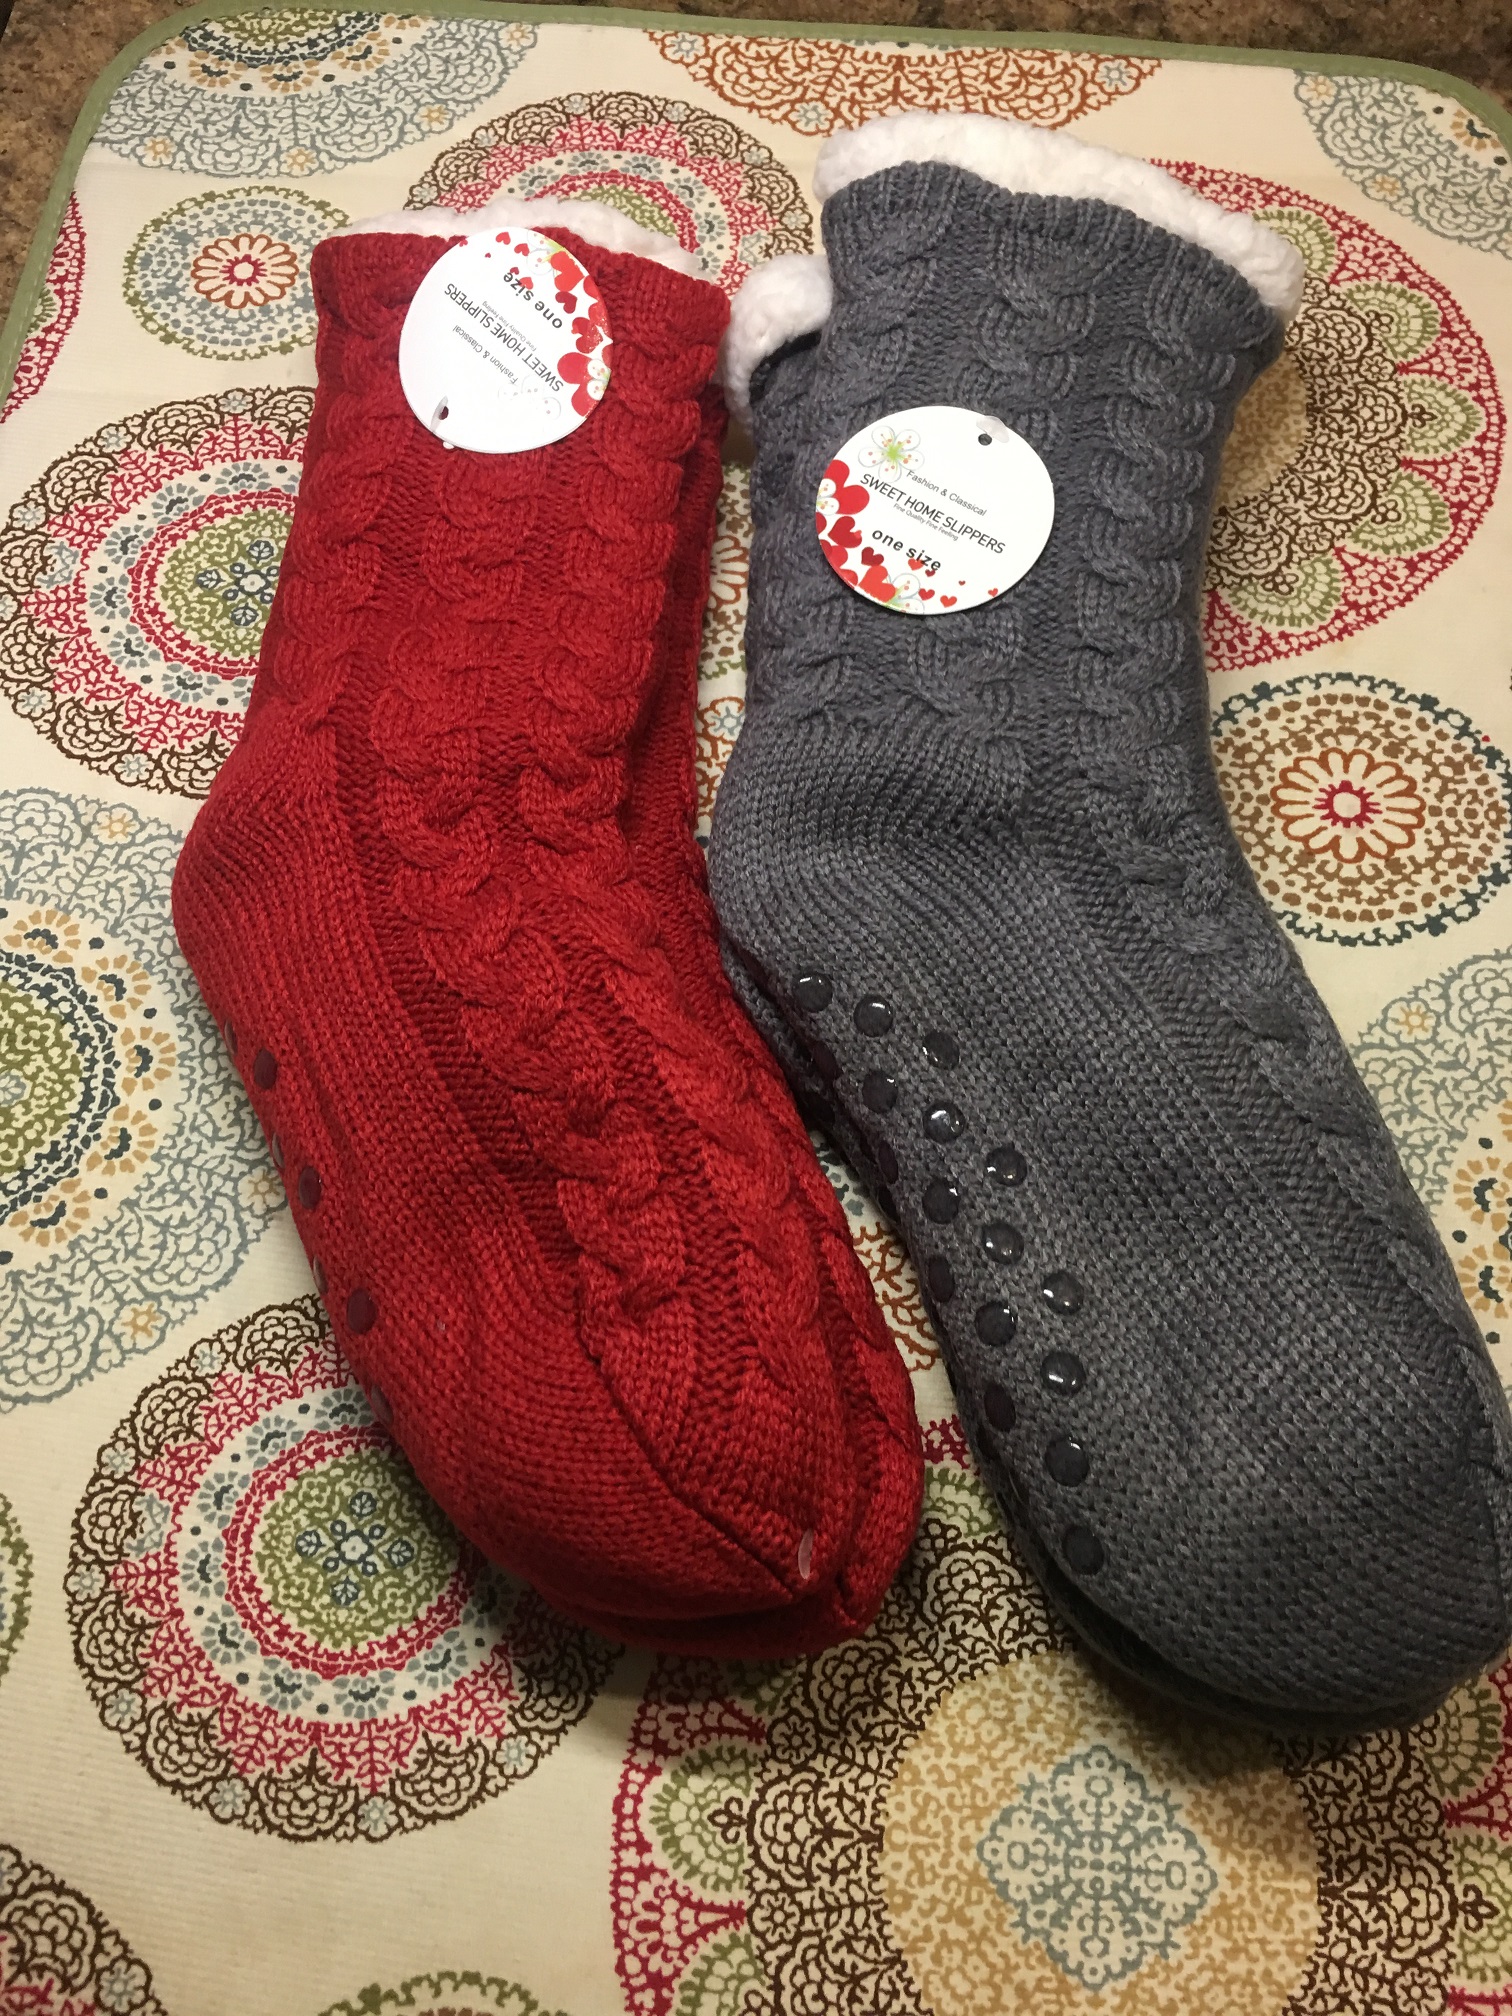 Great winter slipper socks